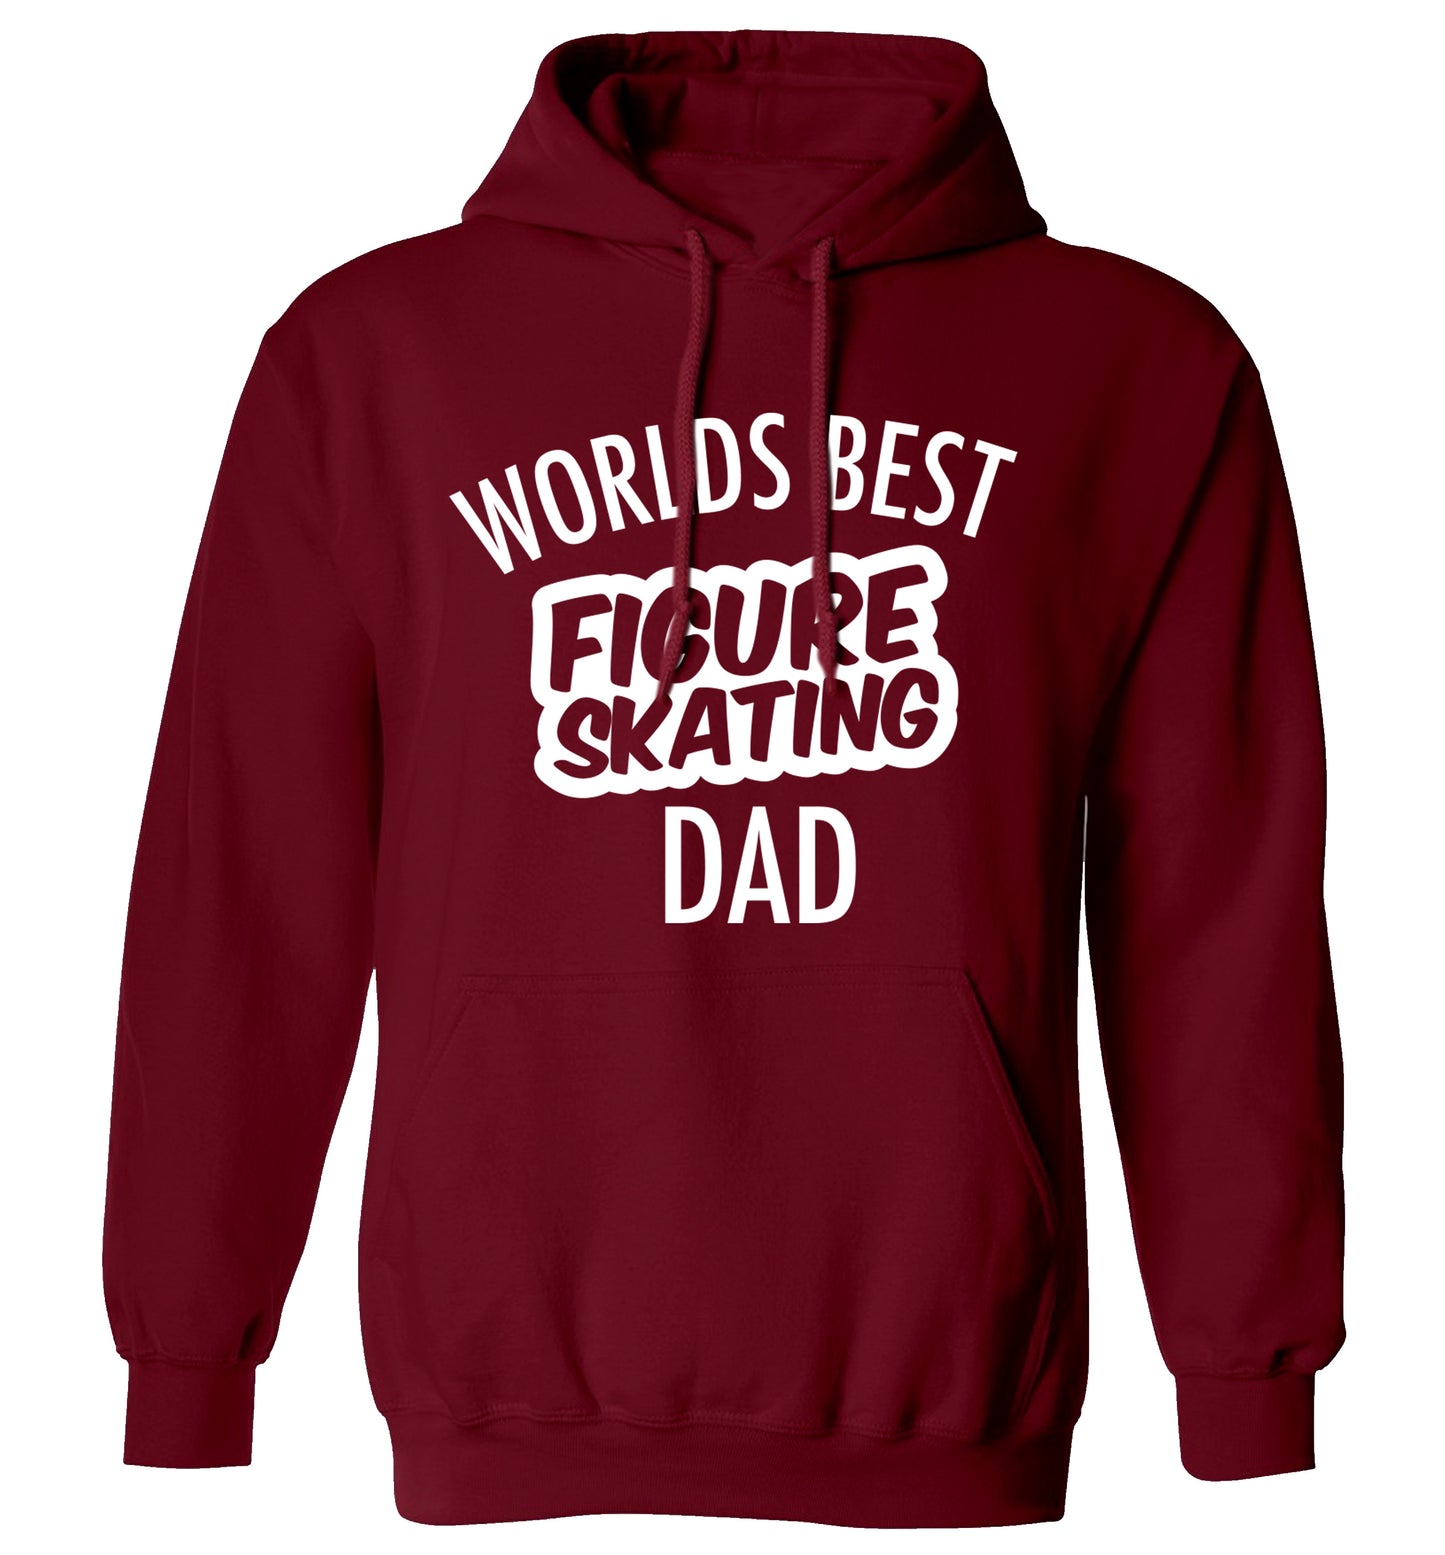 Worlds best figure skating dad adults unisexmaroon hoodie 2XL